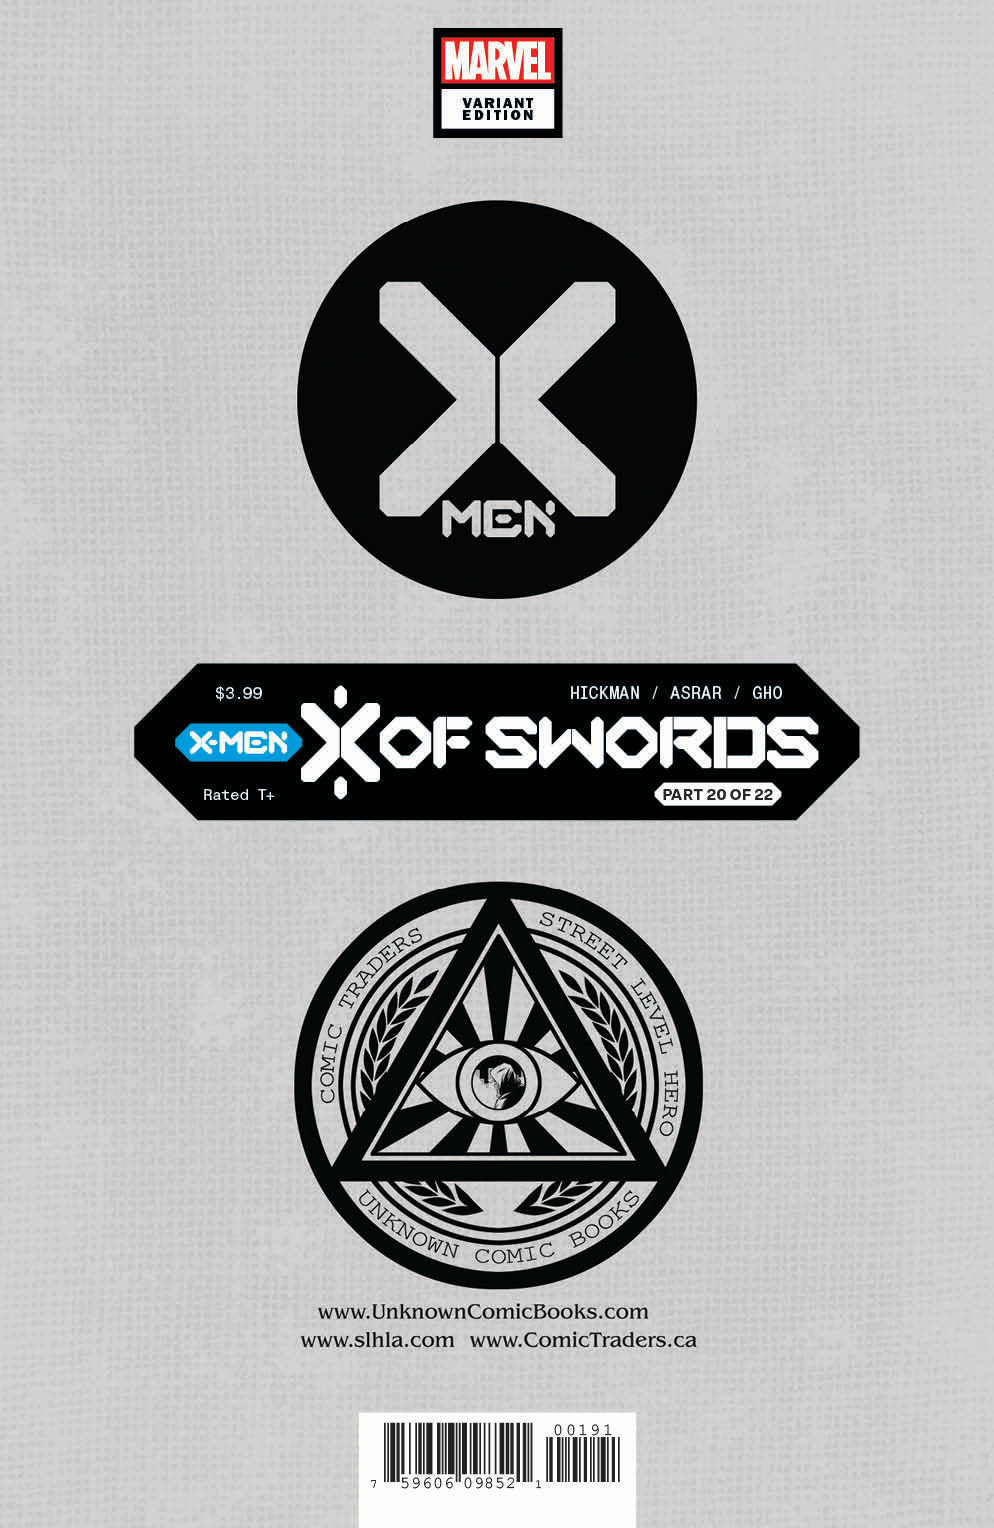 X-MEN #15 UNKNOWN COMICS KAEL NGU EXCLUSIVE VAR XOS (11/25/2020)